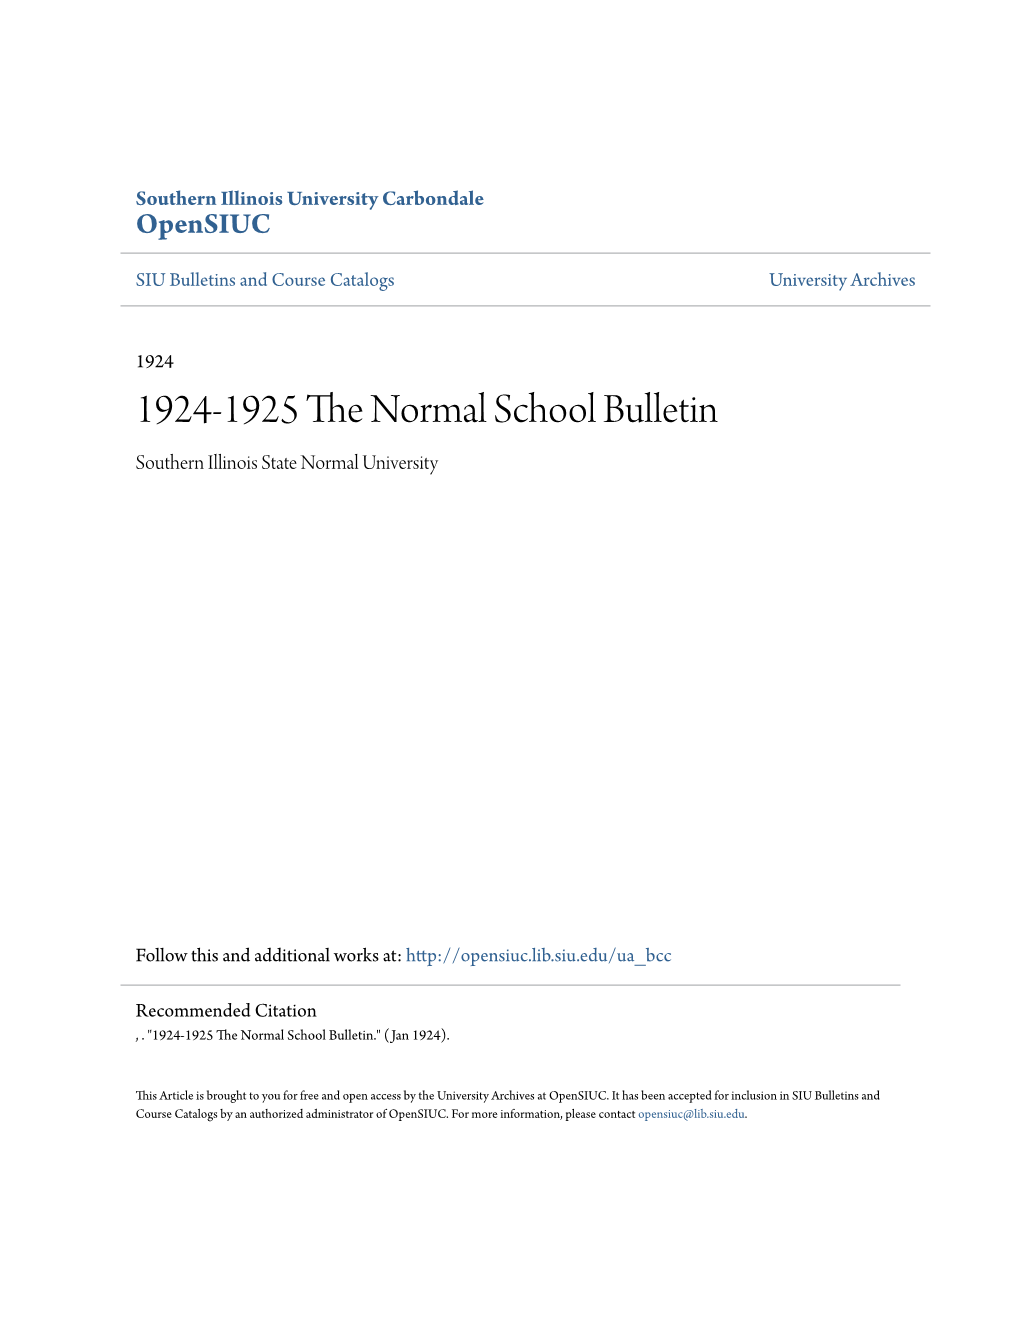 1924-1925 the Normal School Bulletin